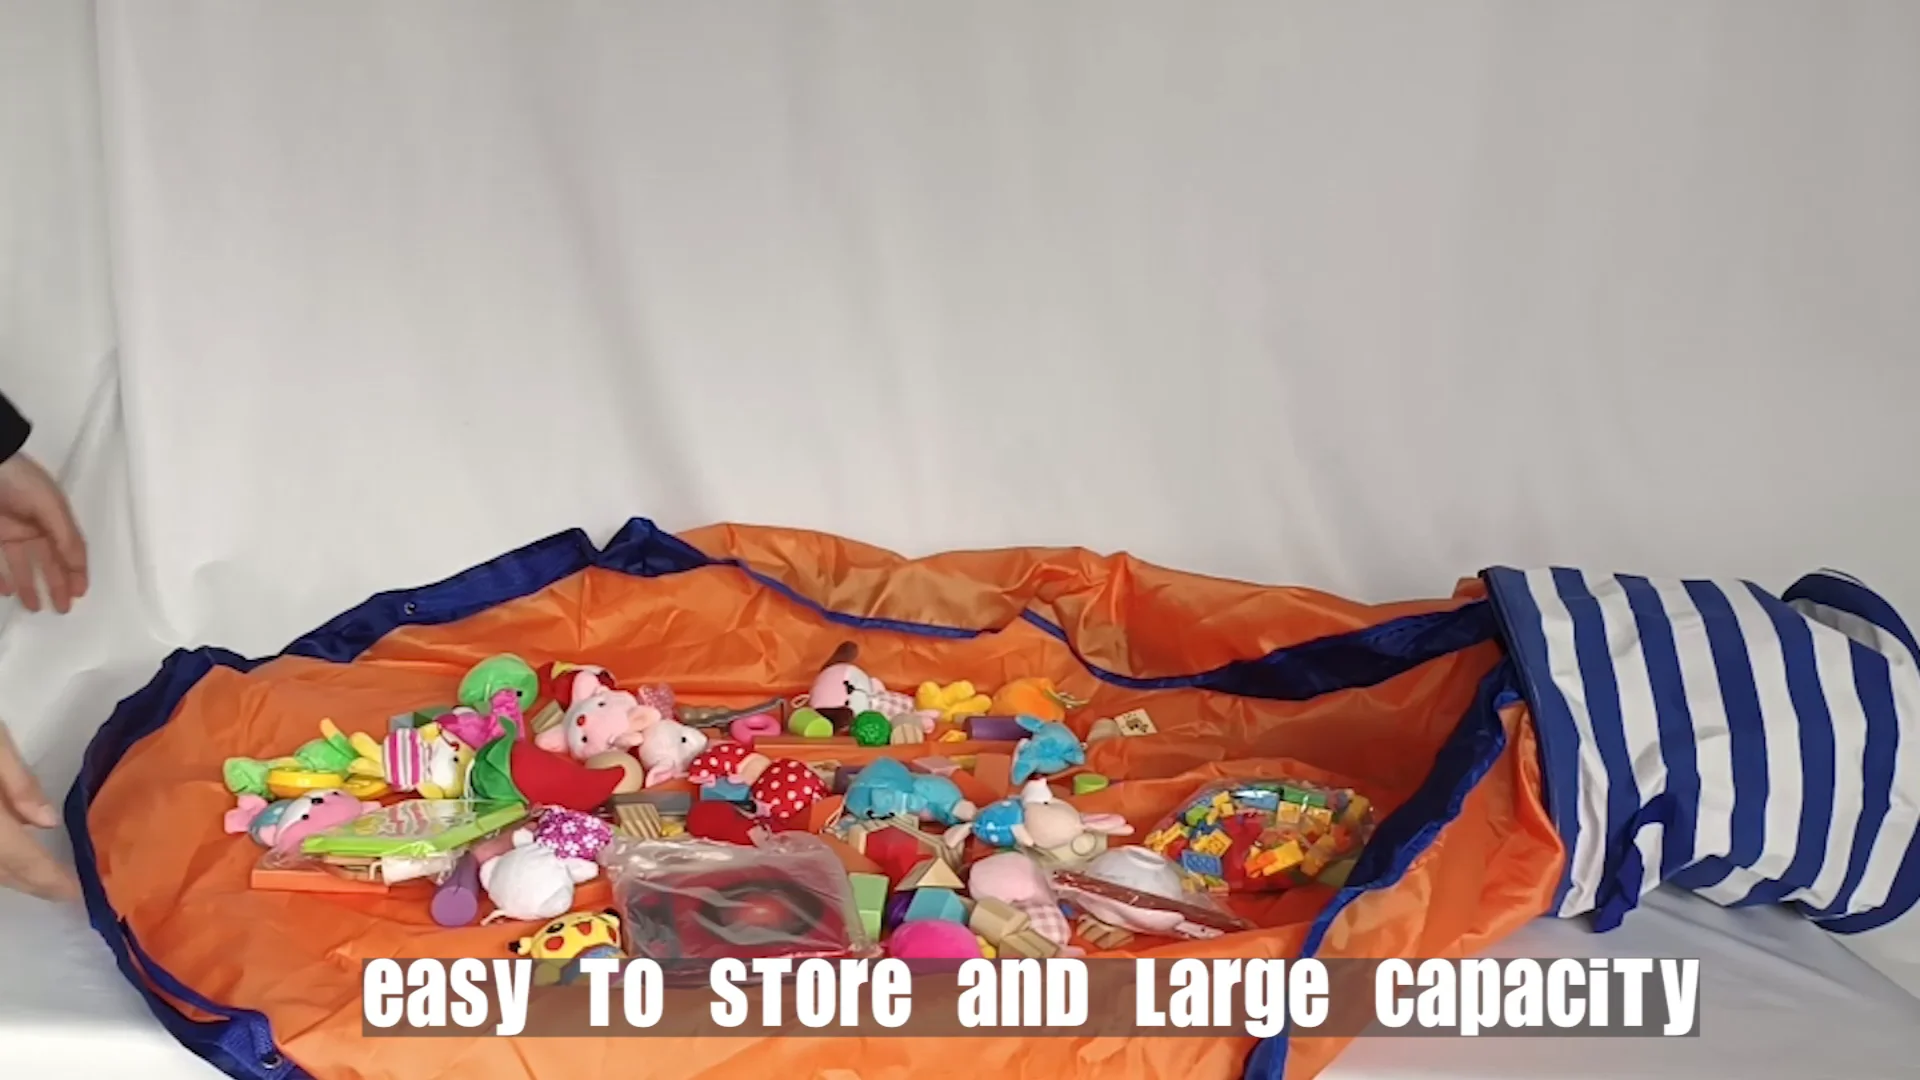 Toy Storage Bag Play Mat Lego  Bag Building Blocks Toy Storage - 1.5m  Children's Toy - Aliexpress